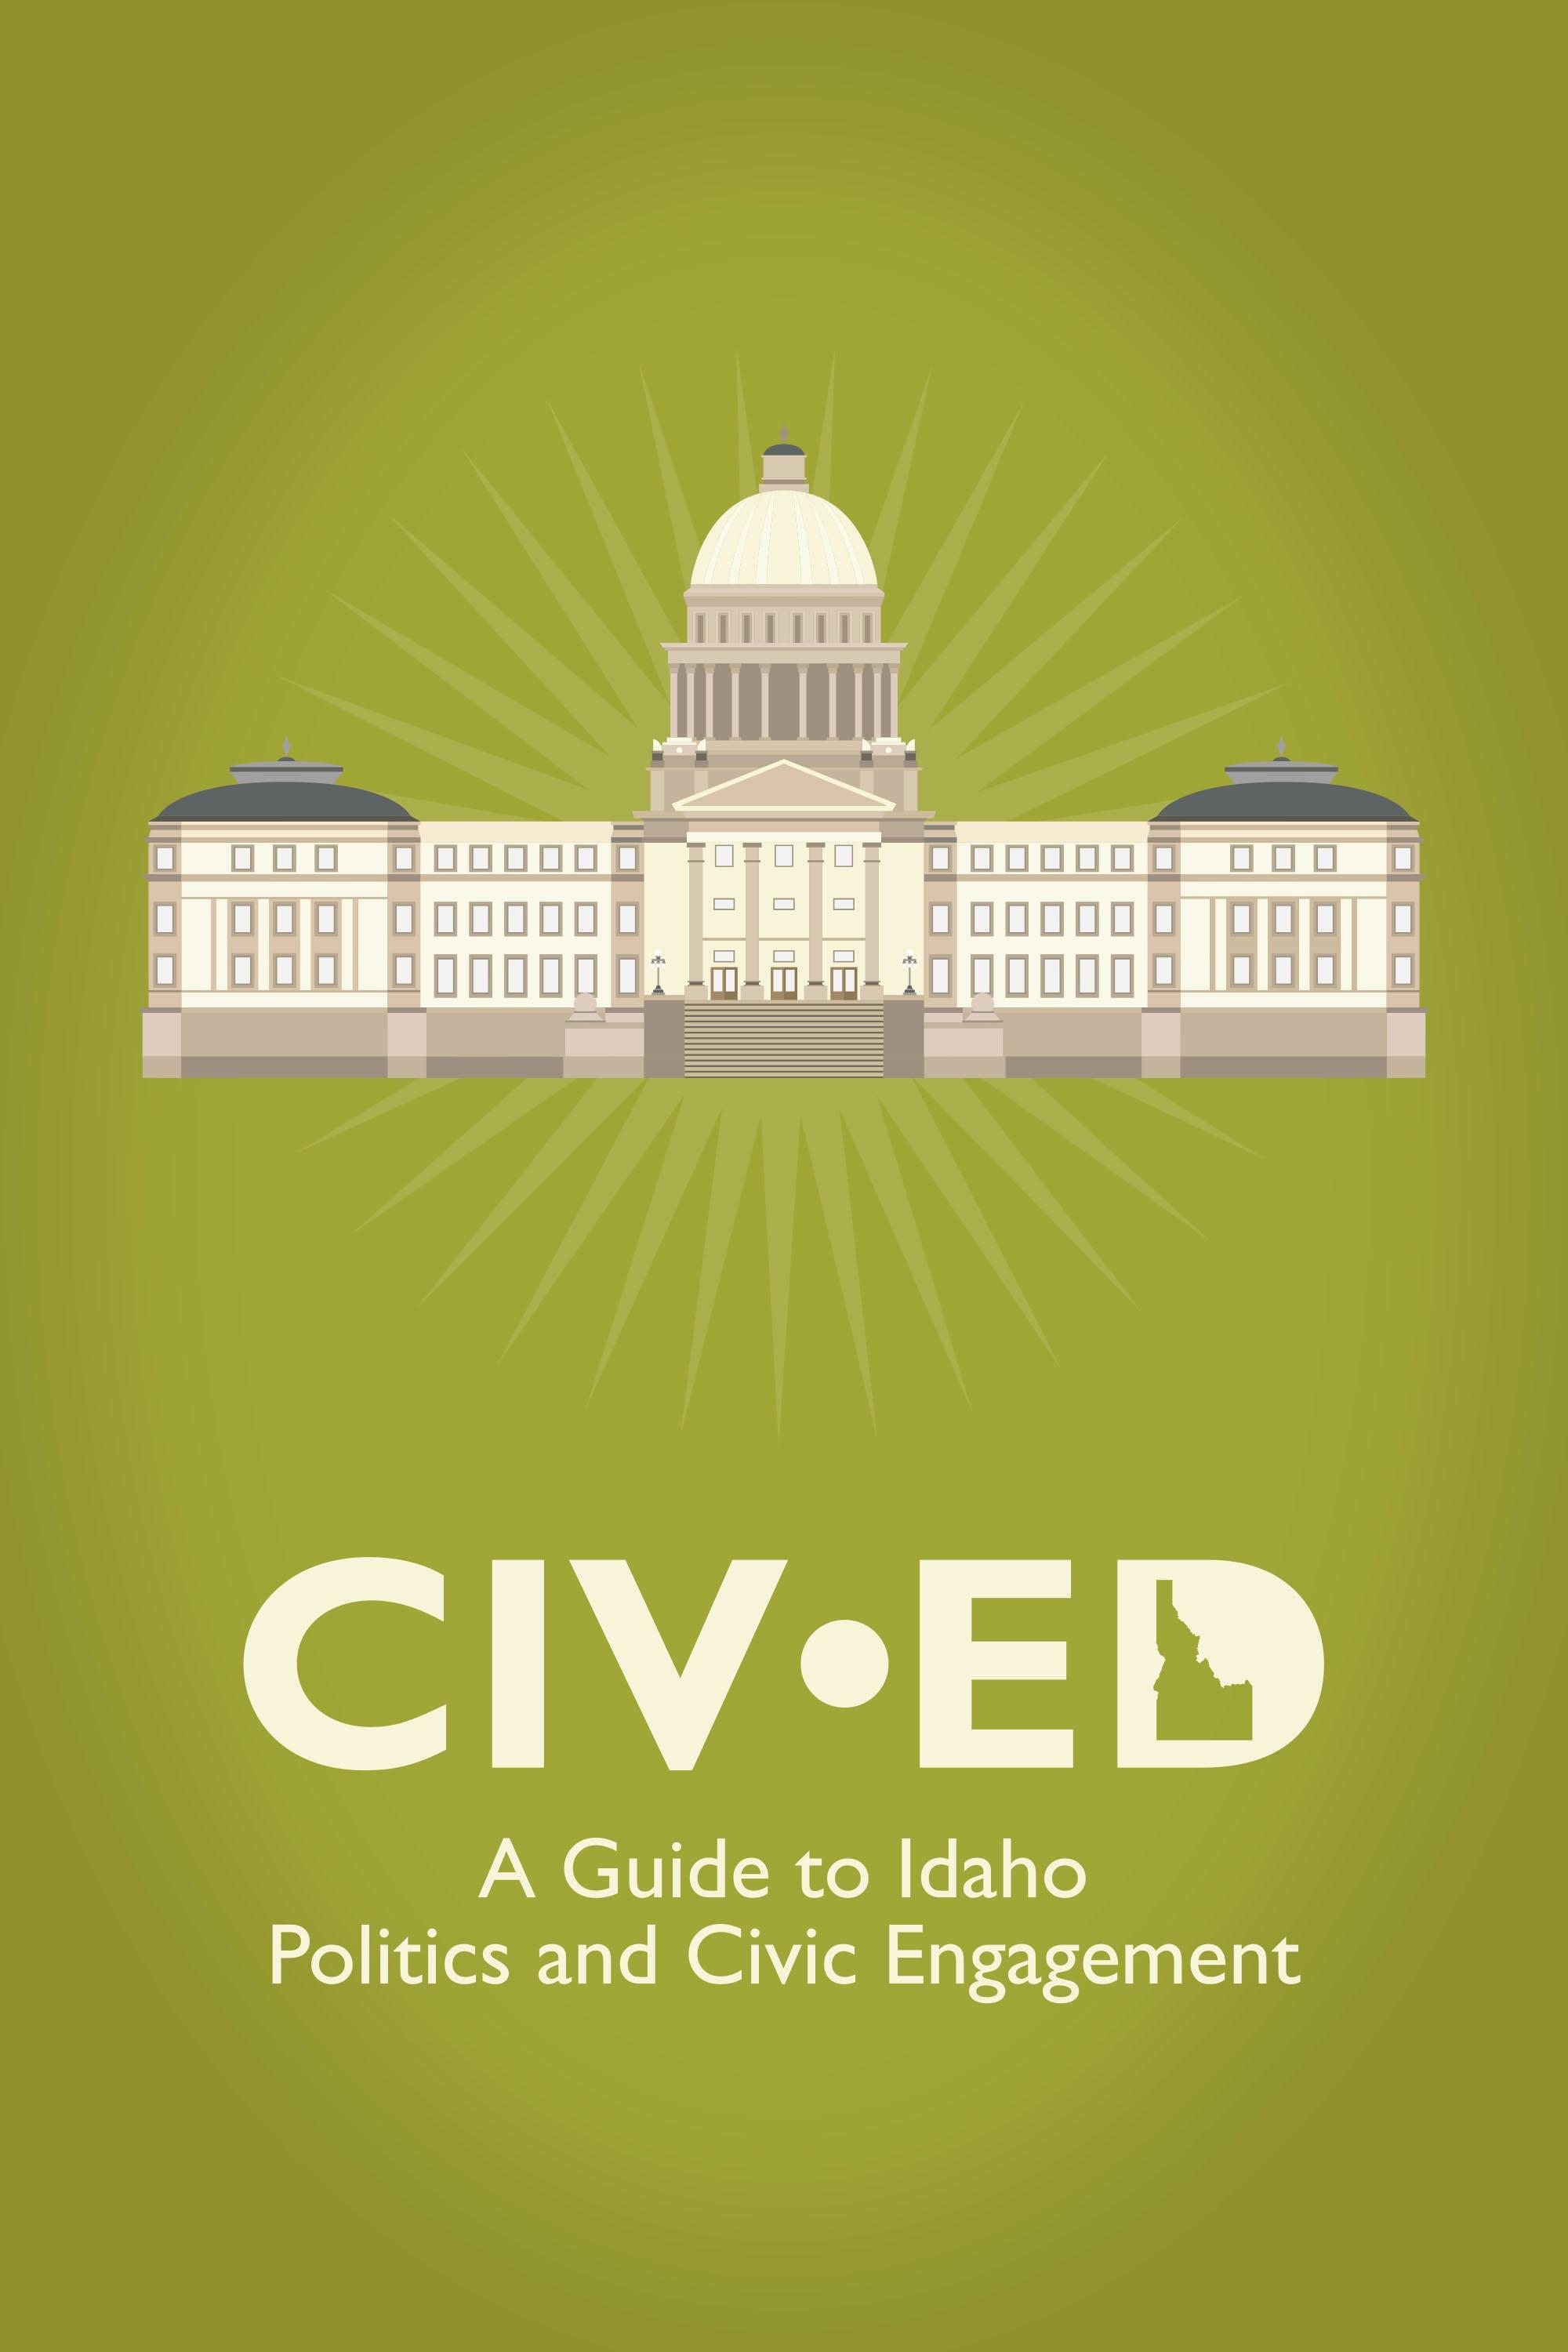 Civ Ed: A Guide to Idaho Politics and Civic Engagement